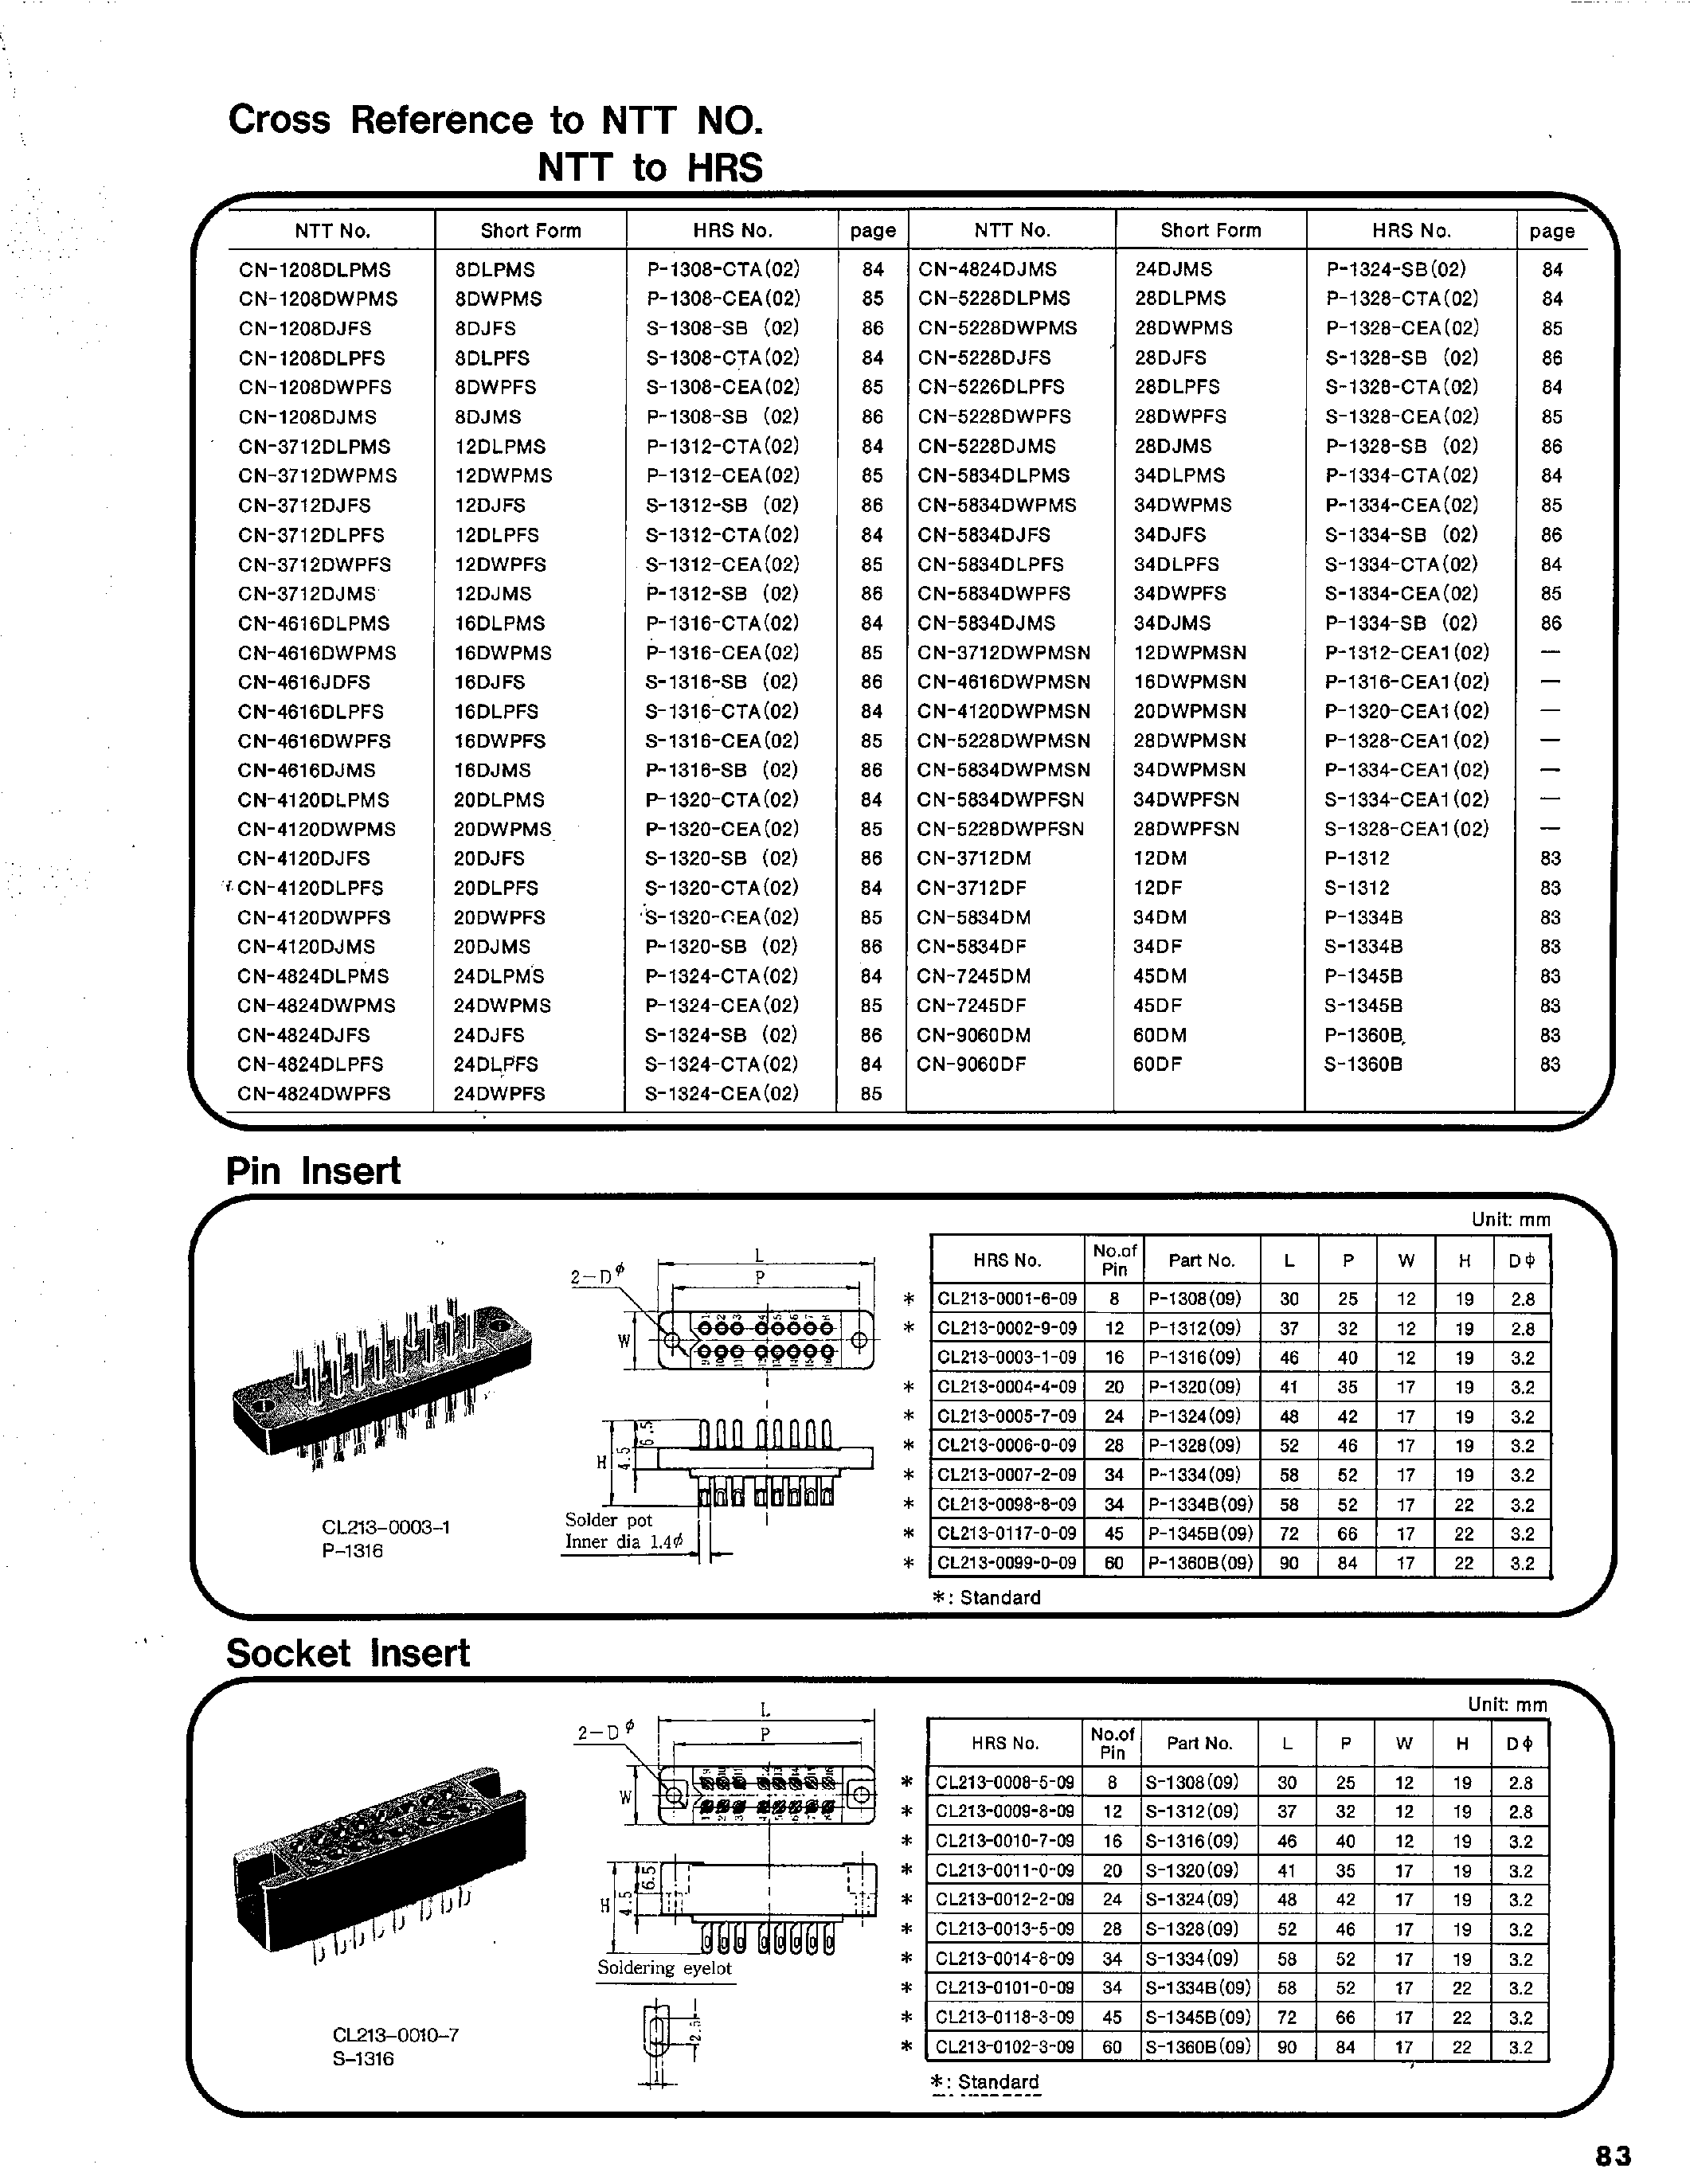 Datasheet P-1345-H - 1300 SERIES RECTANGULAR CONNECTORS page 2